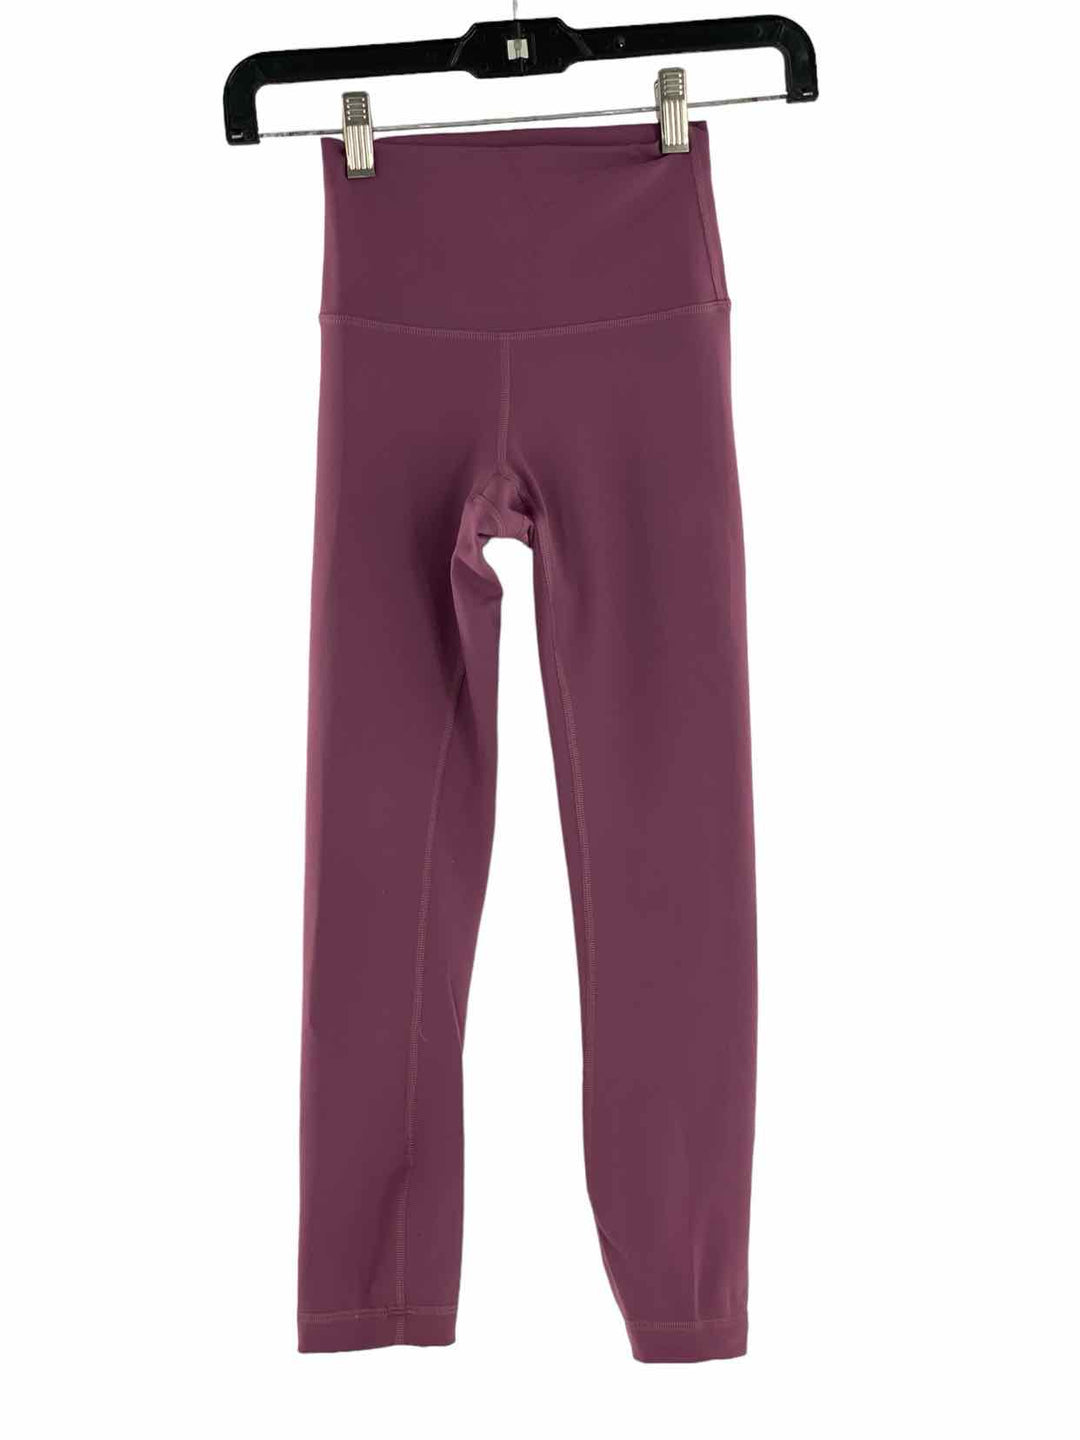 Lululemon Size 0 Purple Athletic Pants